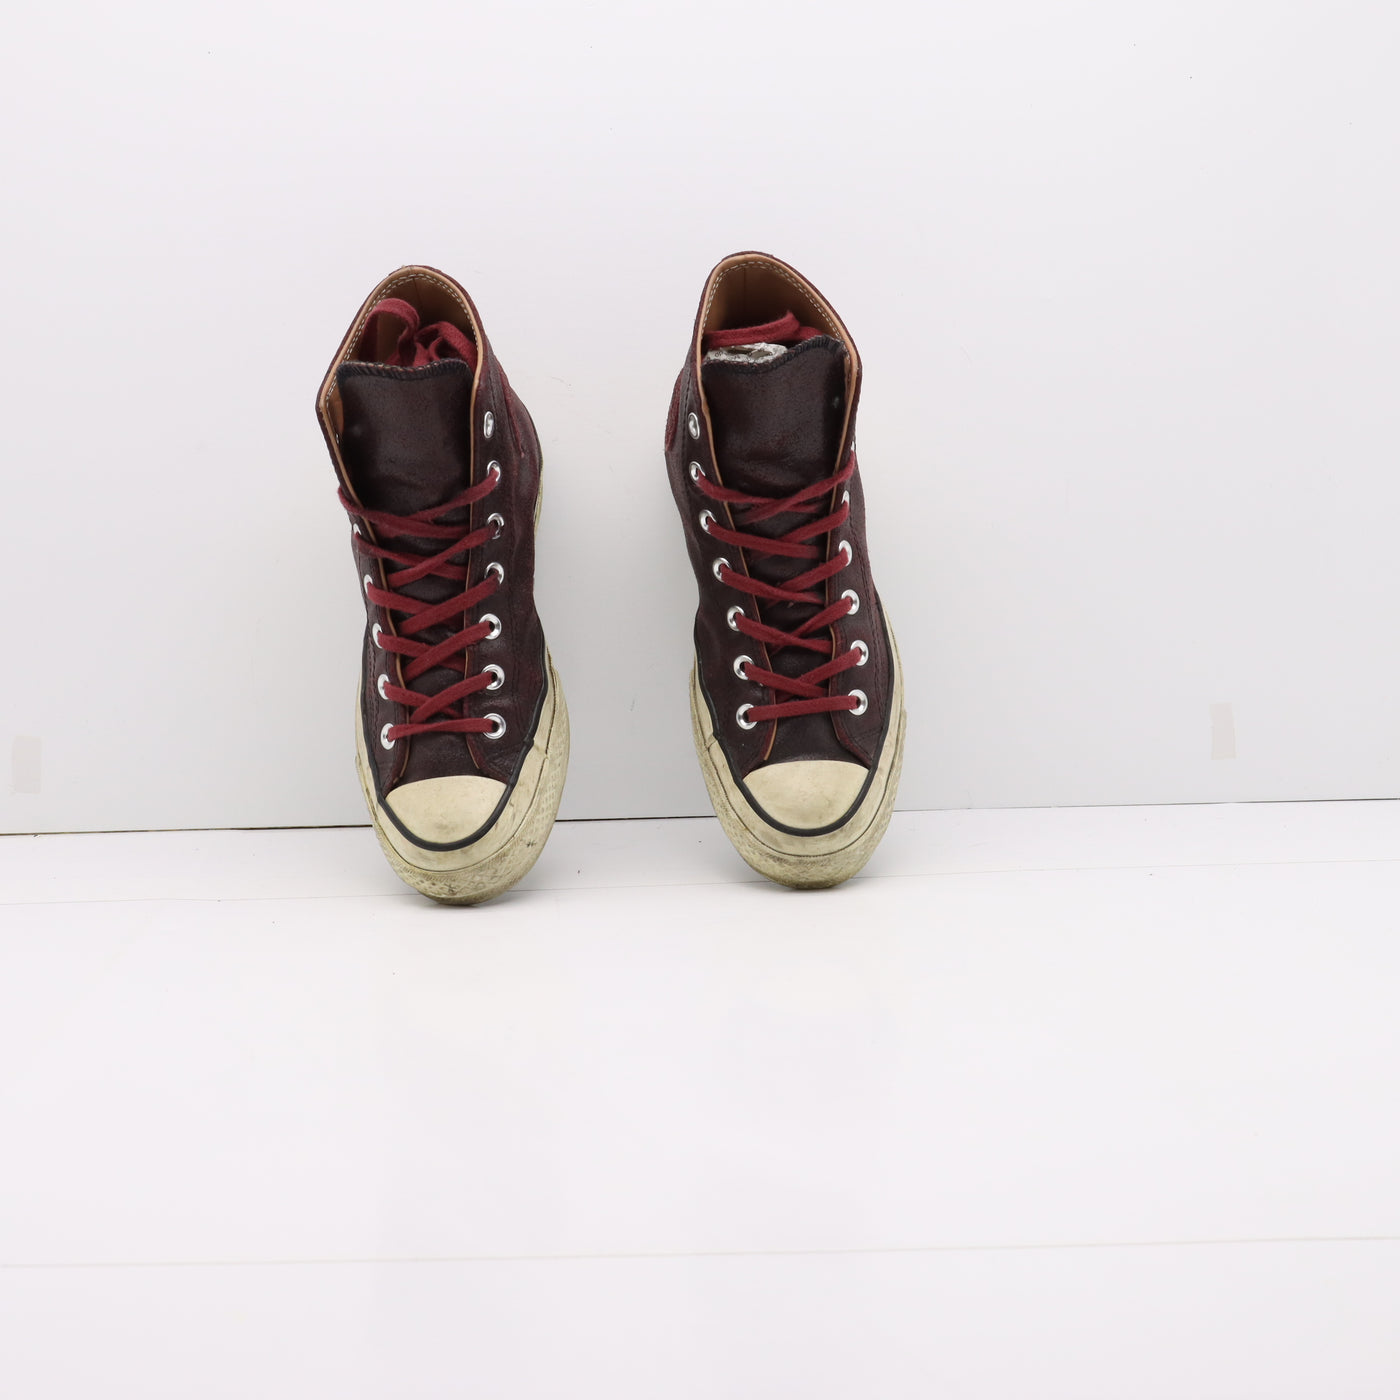 Converse All Star Chuck Taylor Atletich Shoes 70' Alte Rosso Carminio Eur 37.5 Unisex Vintage